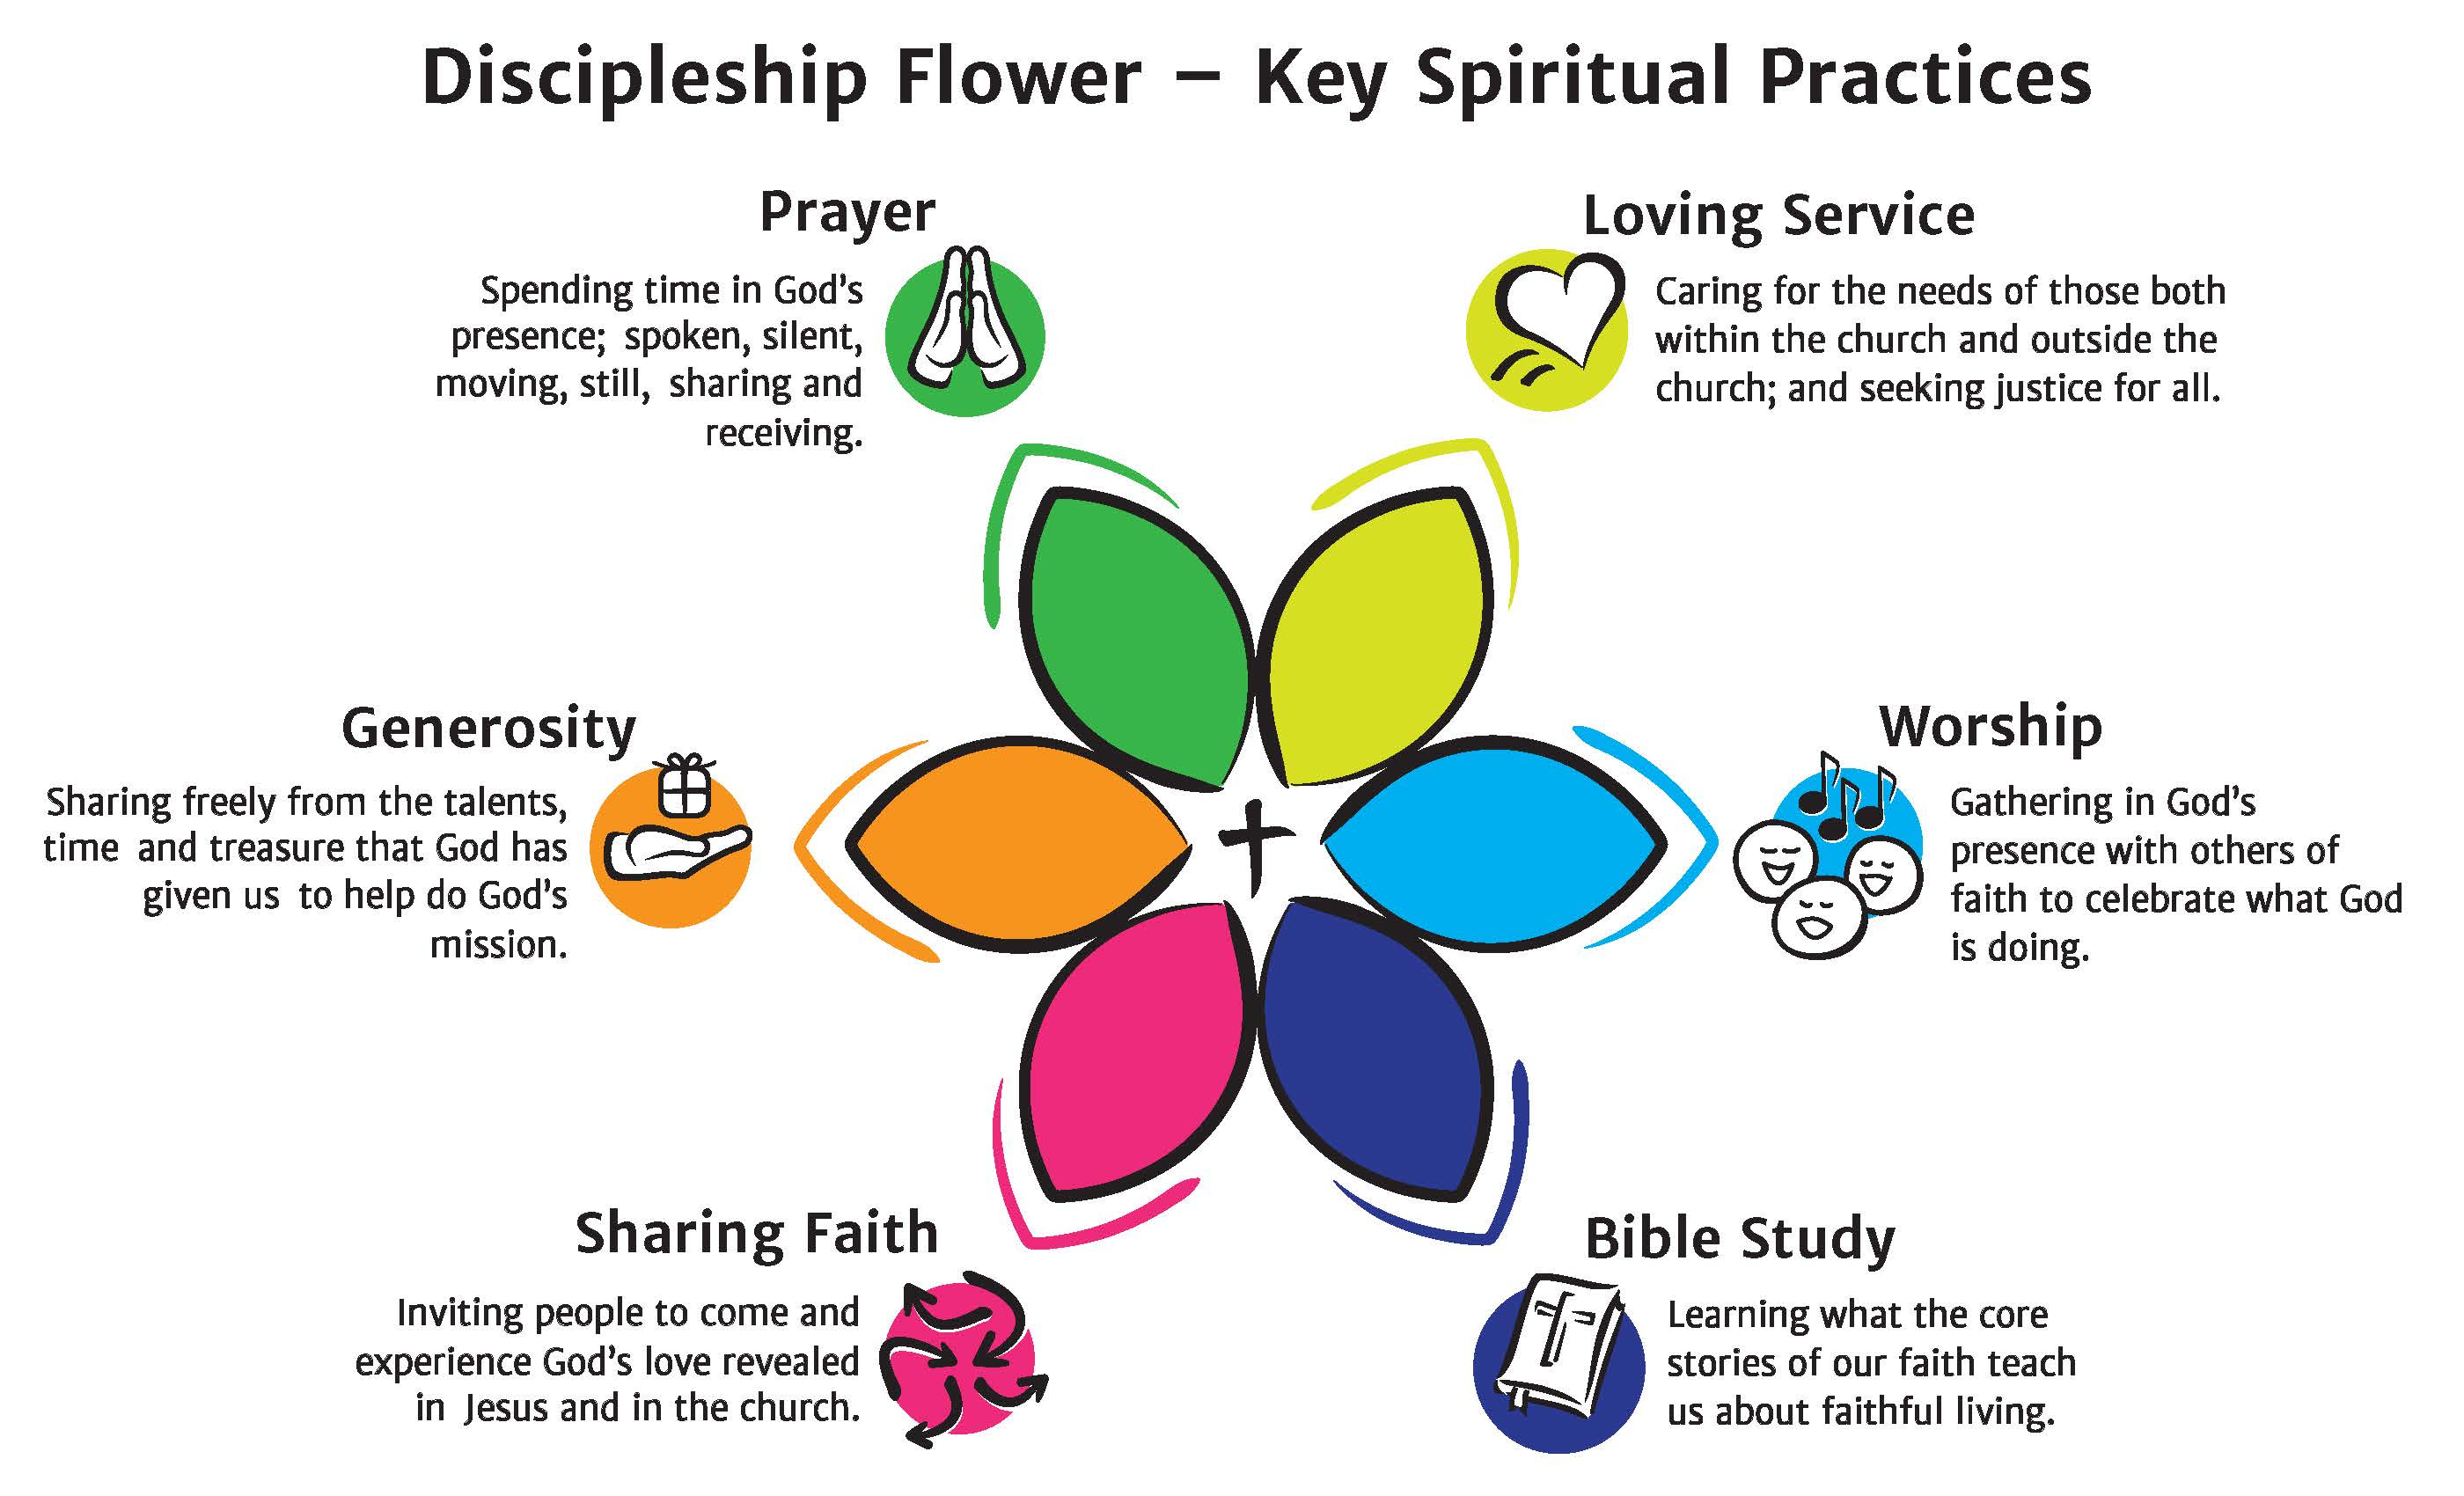 Disicpleship Flower: Key Spiritual Practices